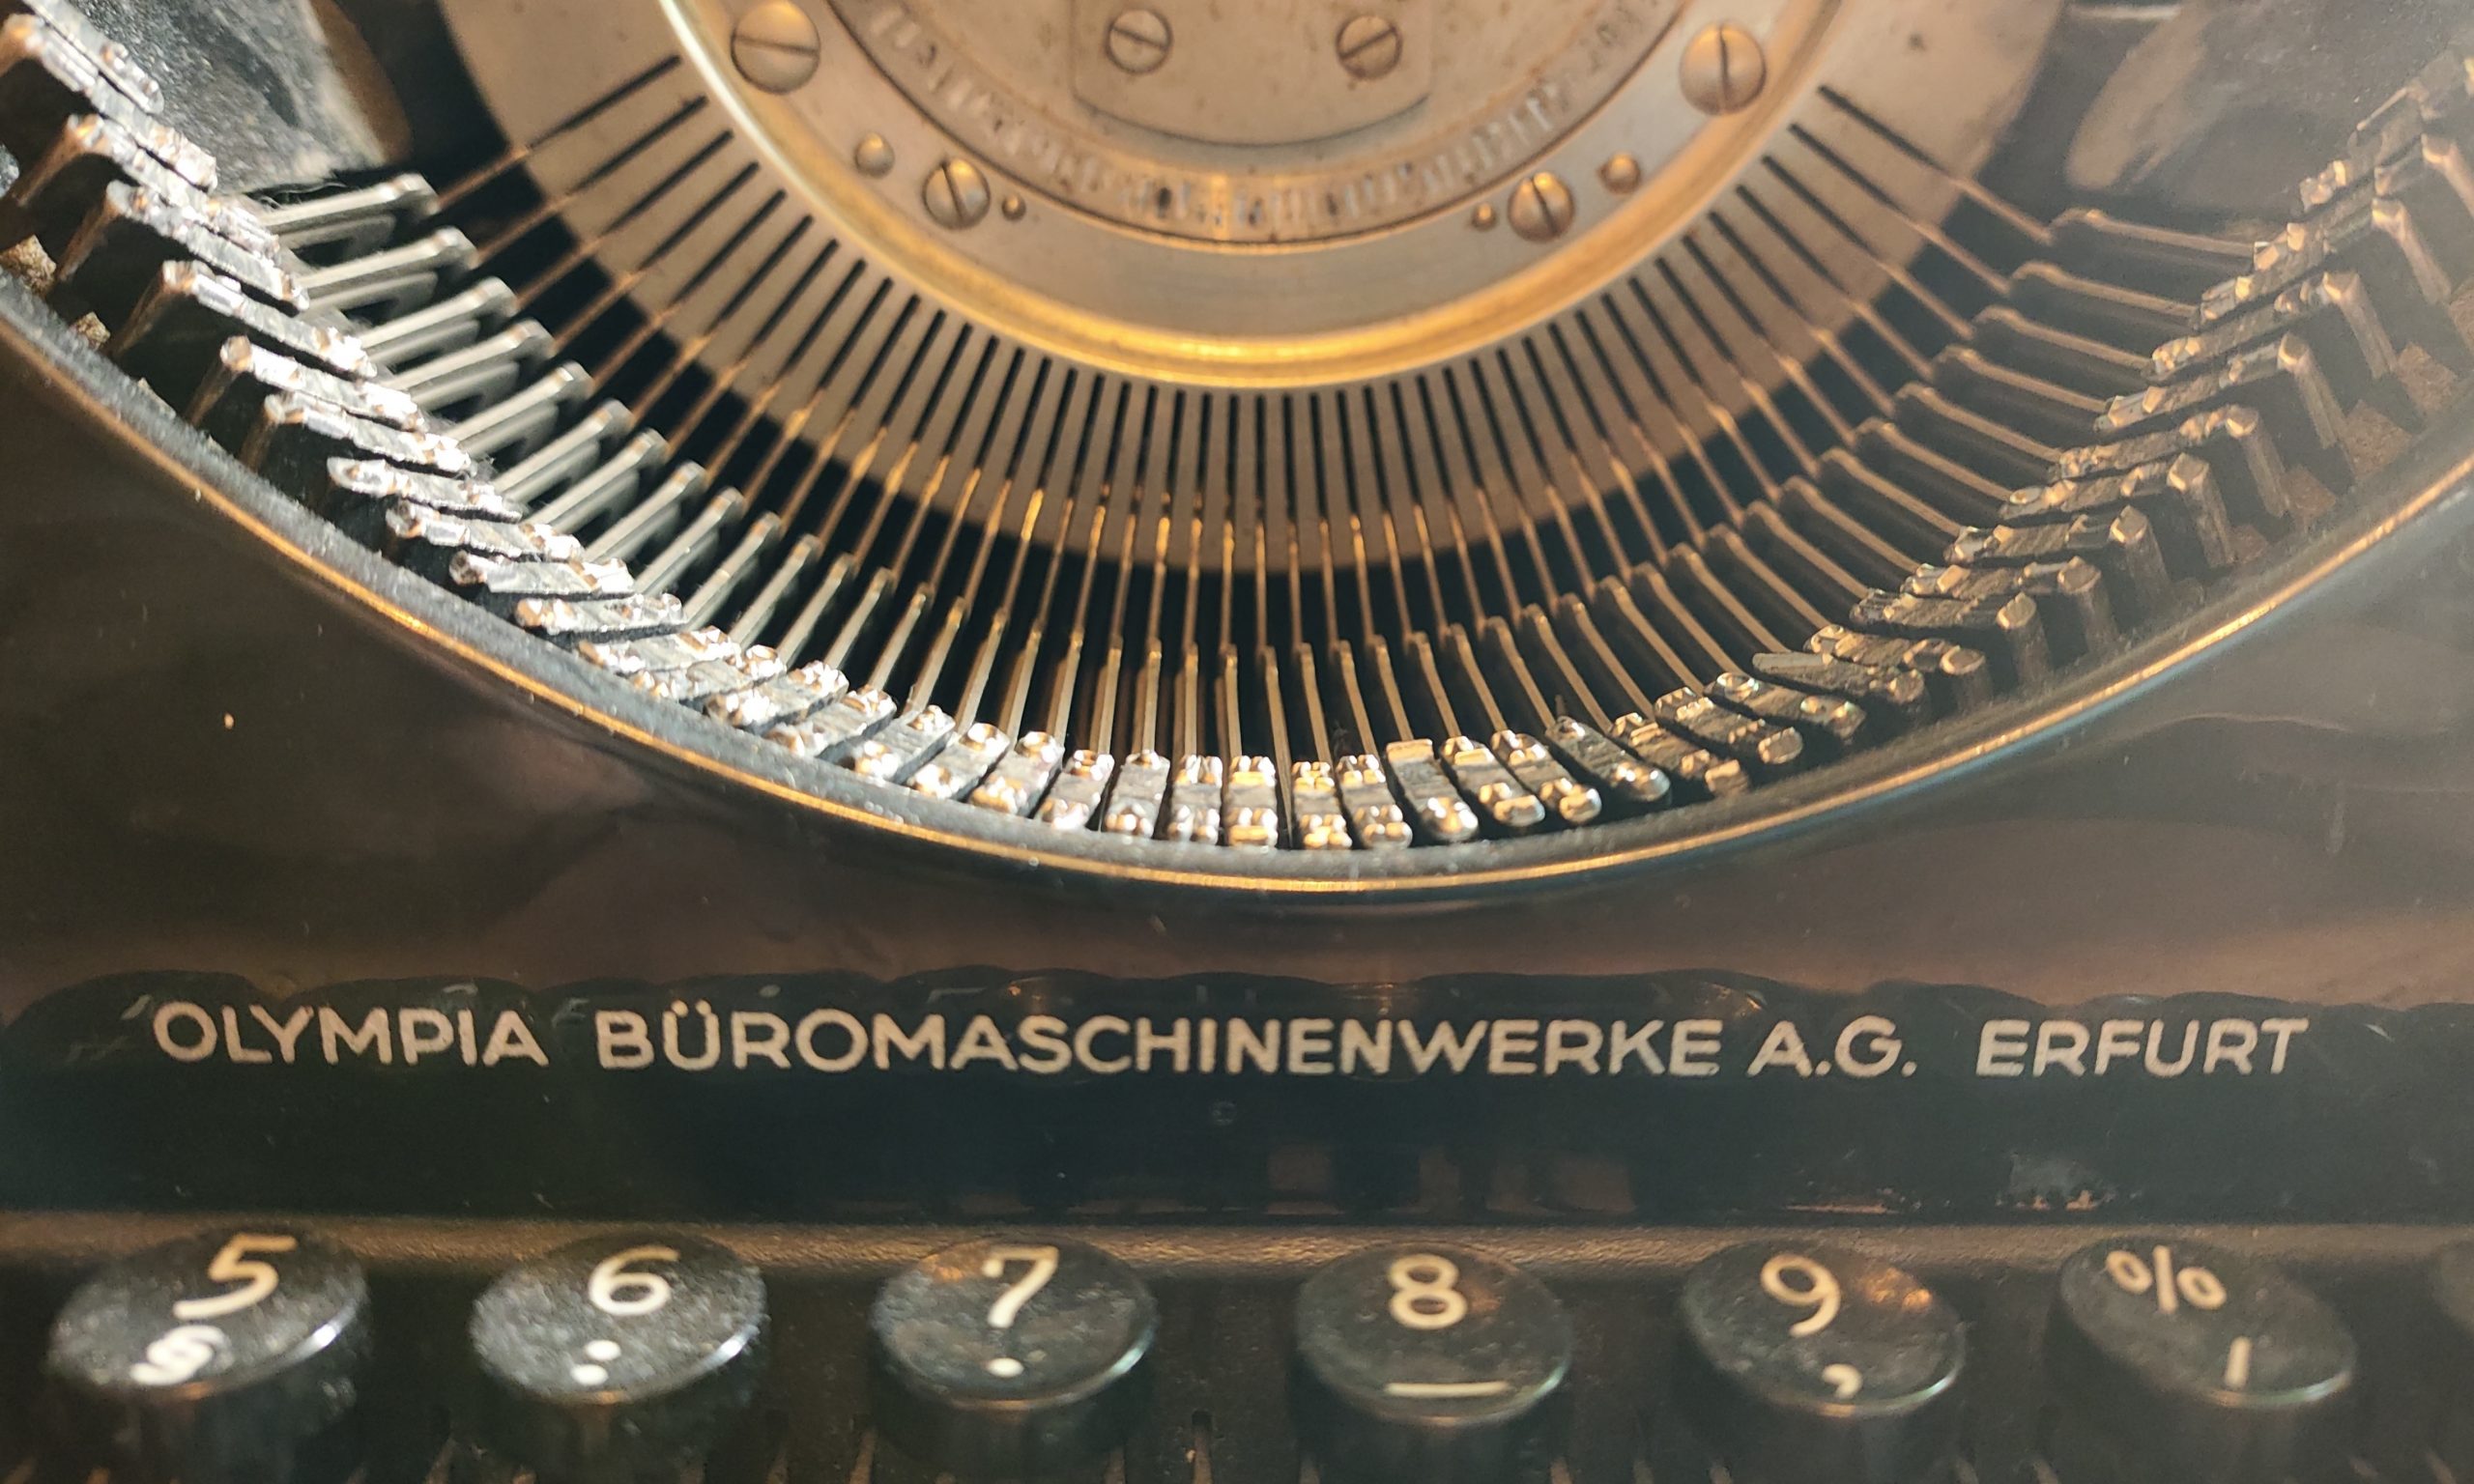 Пишущая машинка Olympia.  Mod. 8. – Erfurt [Эрфурт, Восточная Германия]: Olympia Büromaschinenwerke A.G. – 1940-е г.г.